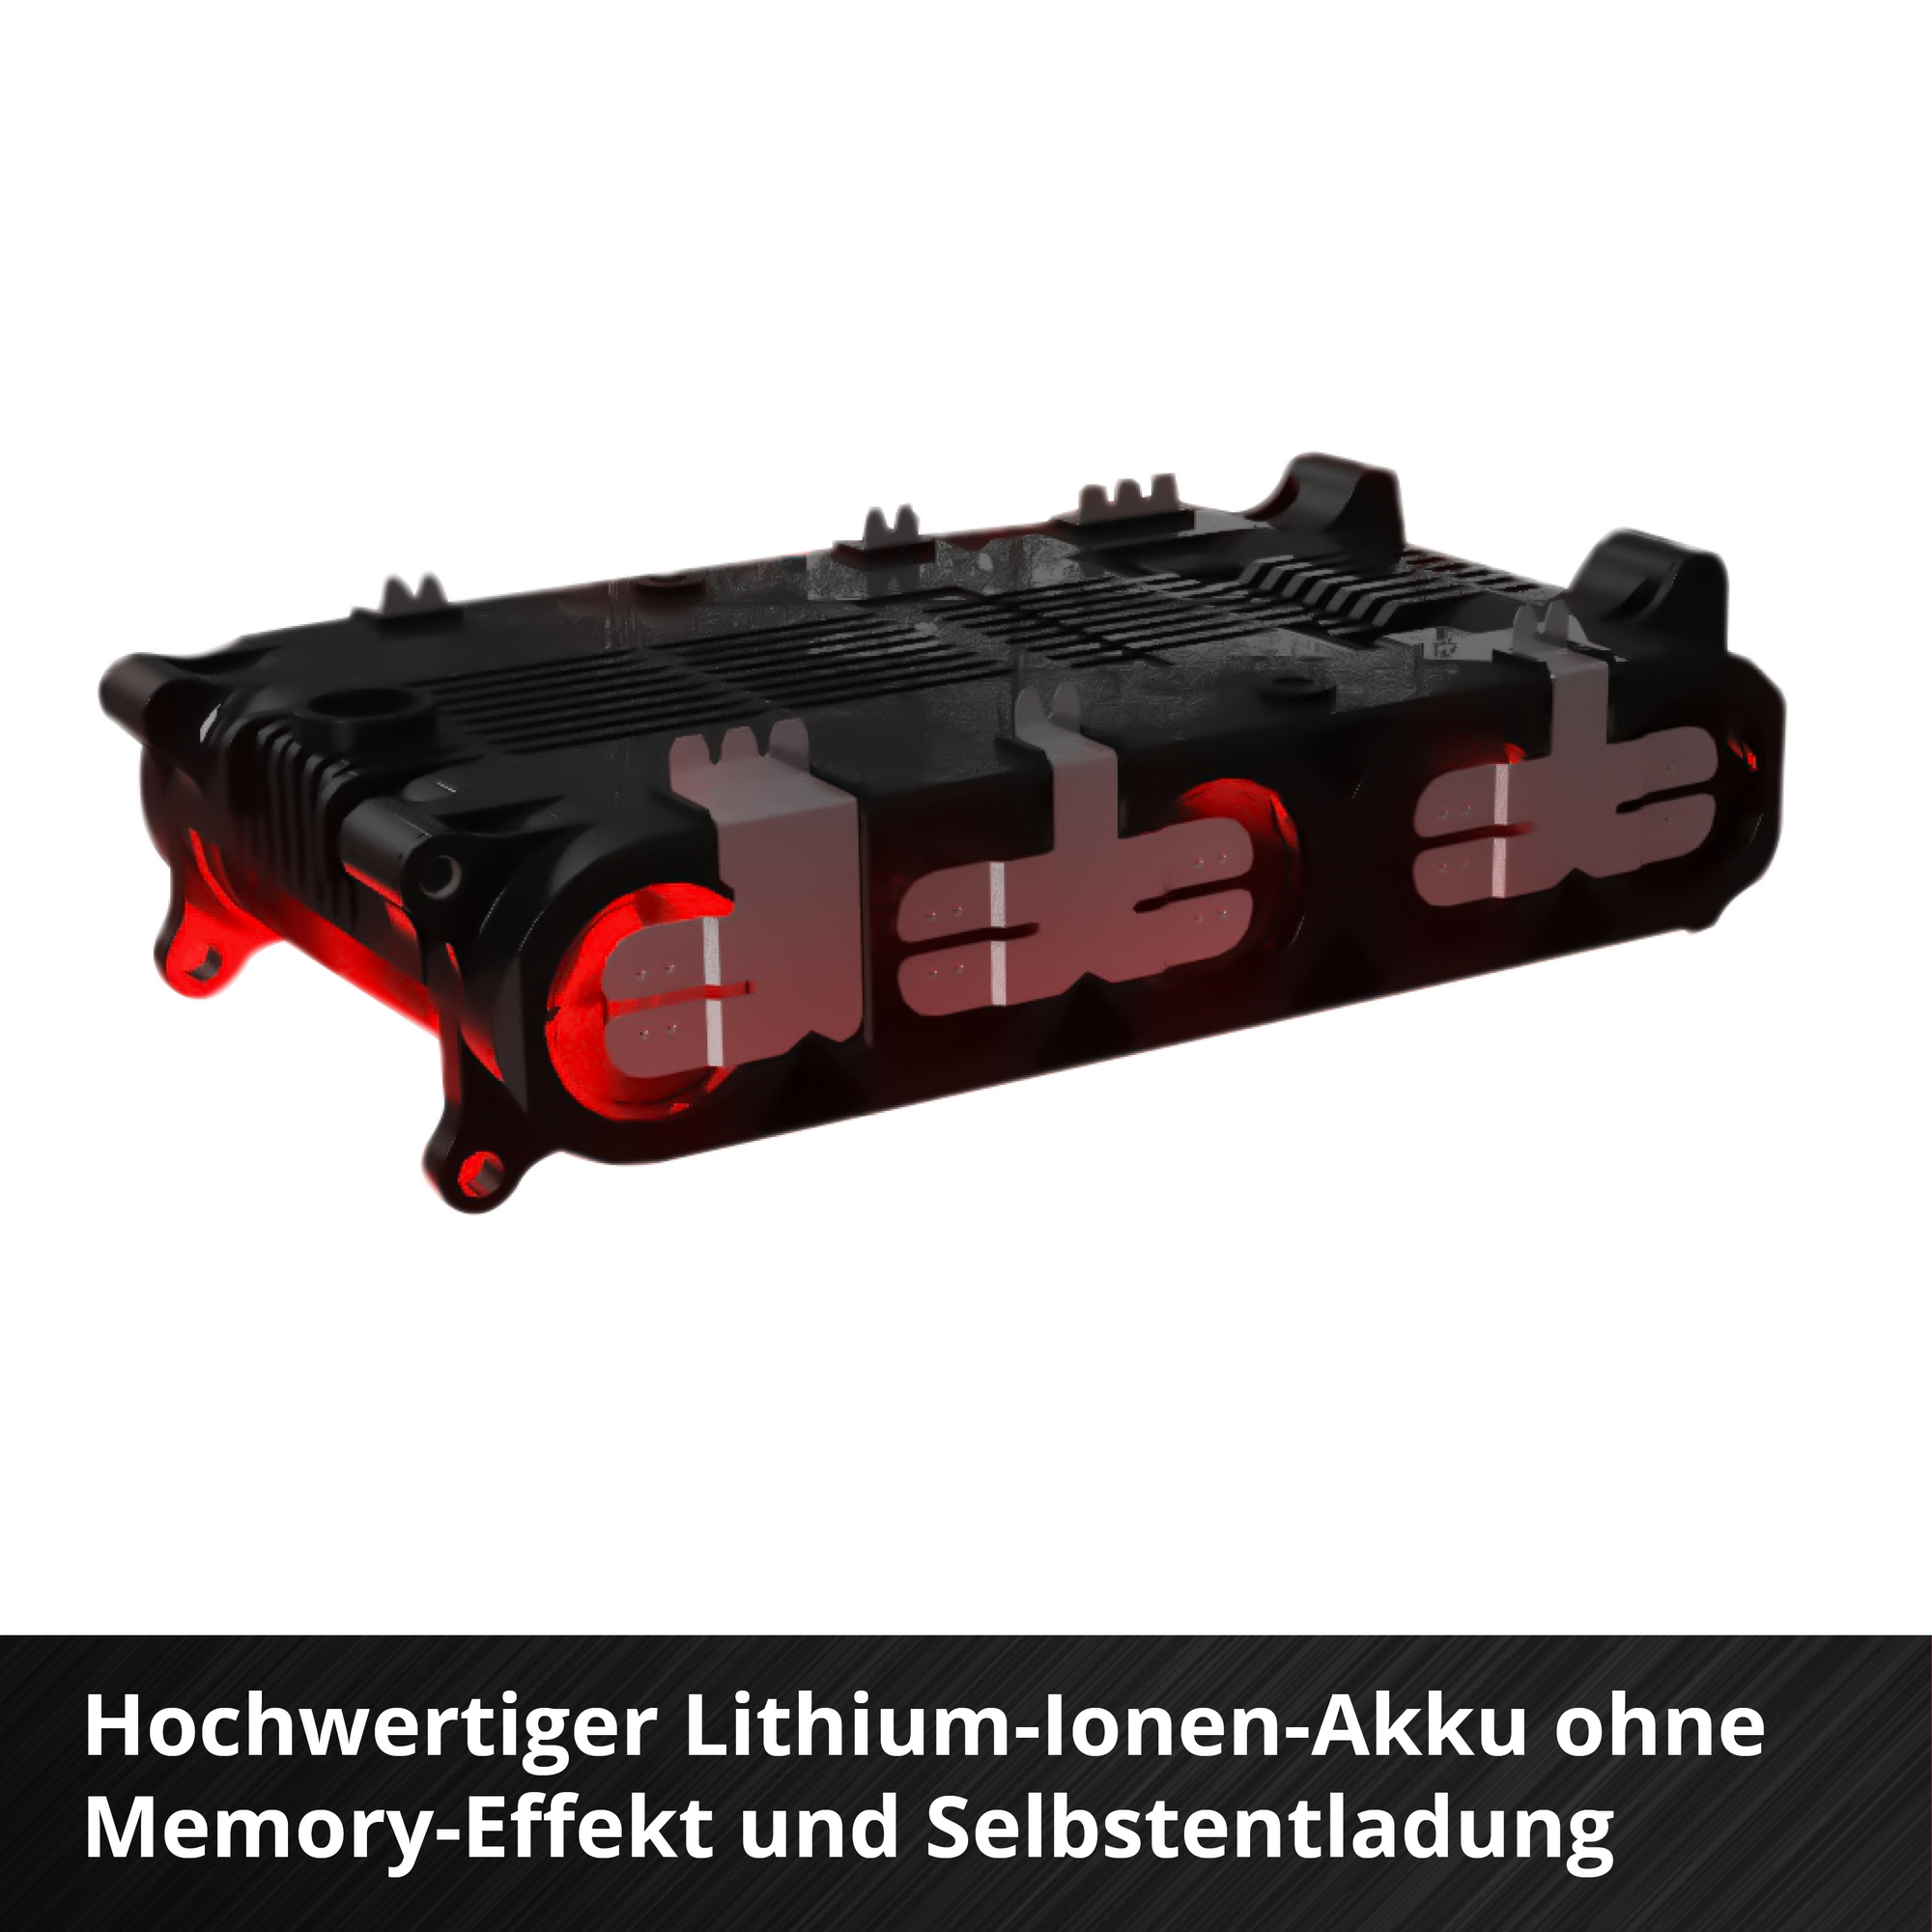 Akku 'Power X-Change Starter-Kit' 18 V 2,5 Ah + product picture